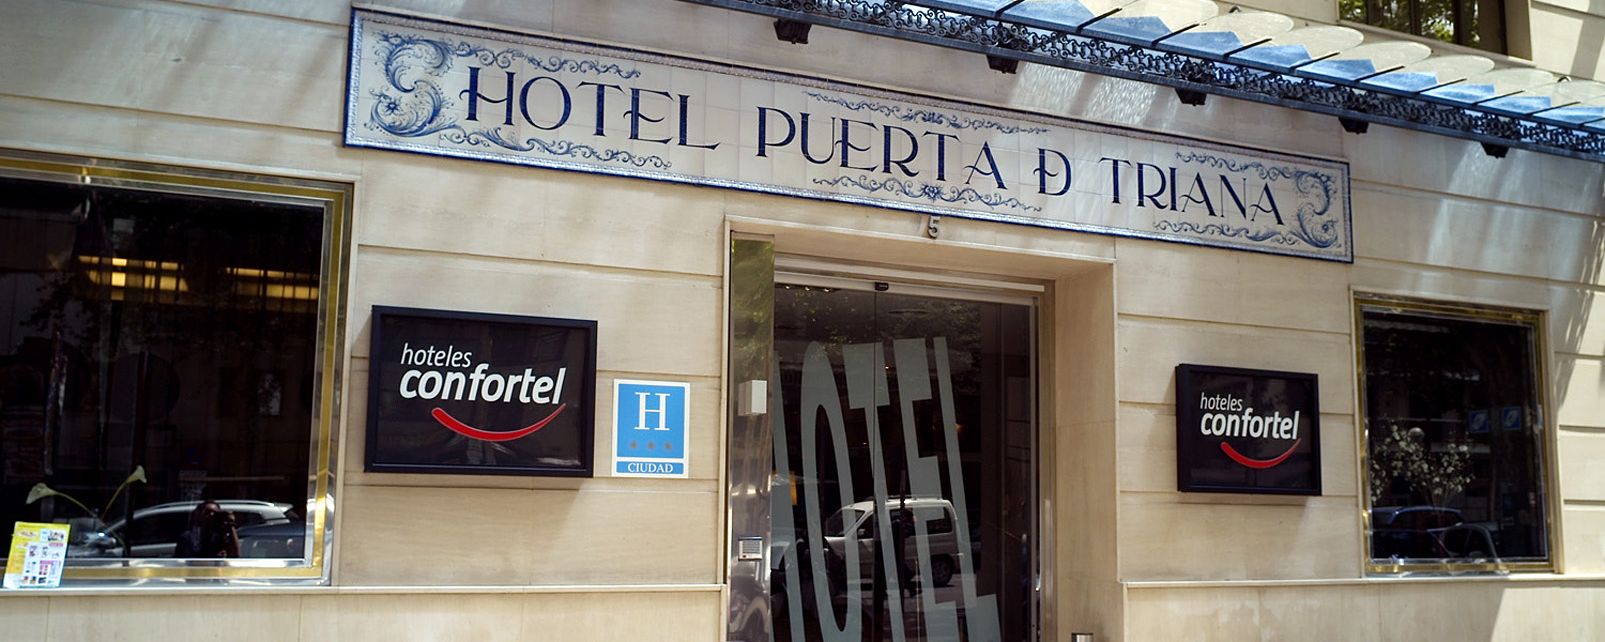 Hôtel Confortel Puerta de Triana